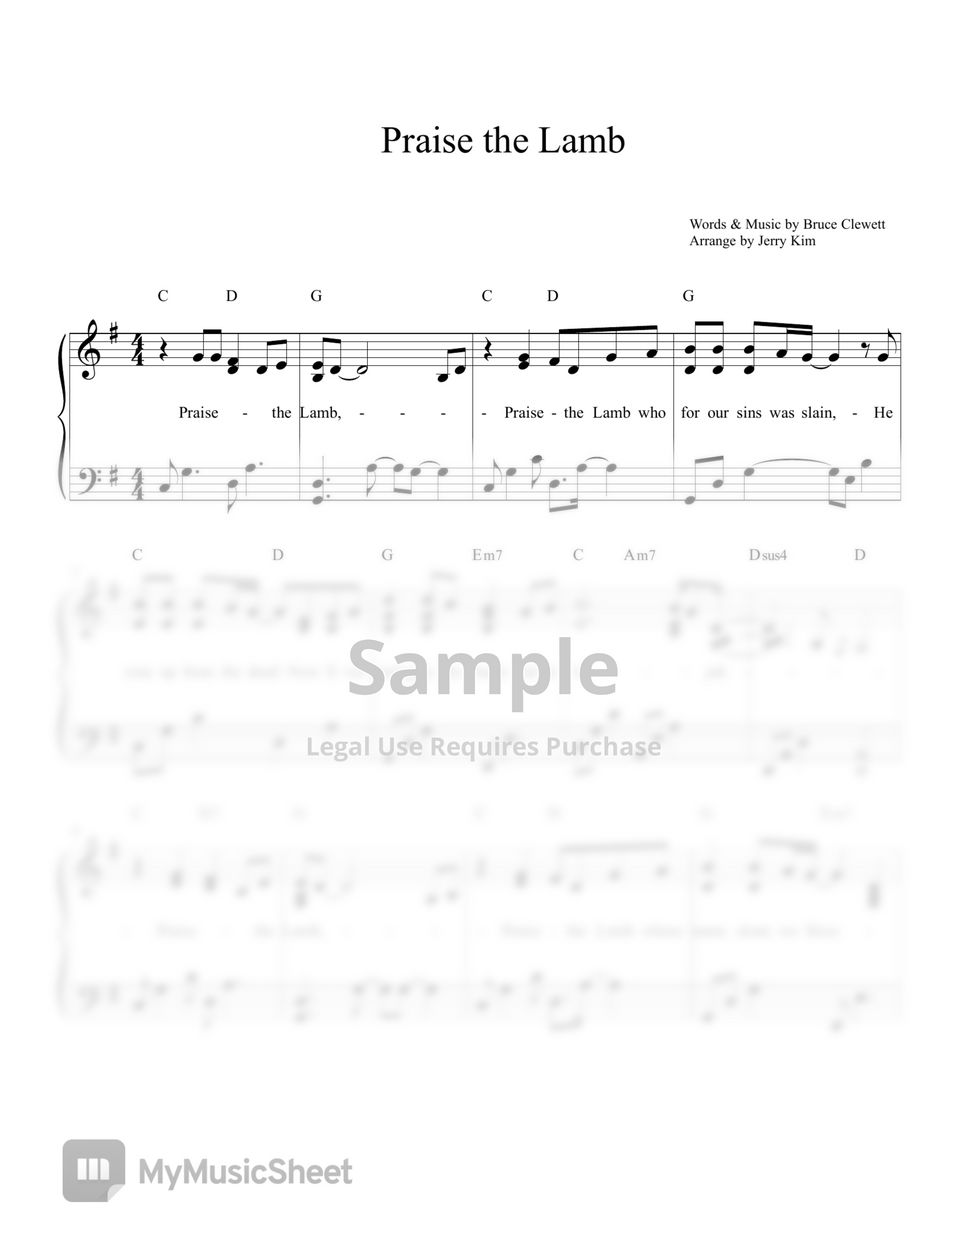 Bruce Clewett - Praise the Lamb (어린양 찬양) (G Key) by Jerry Kim (제리킴)